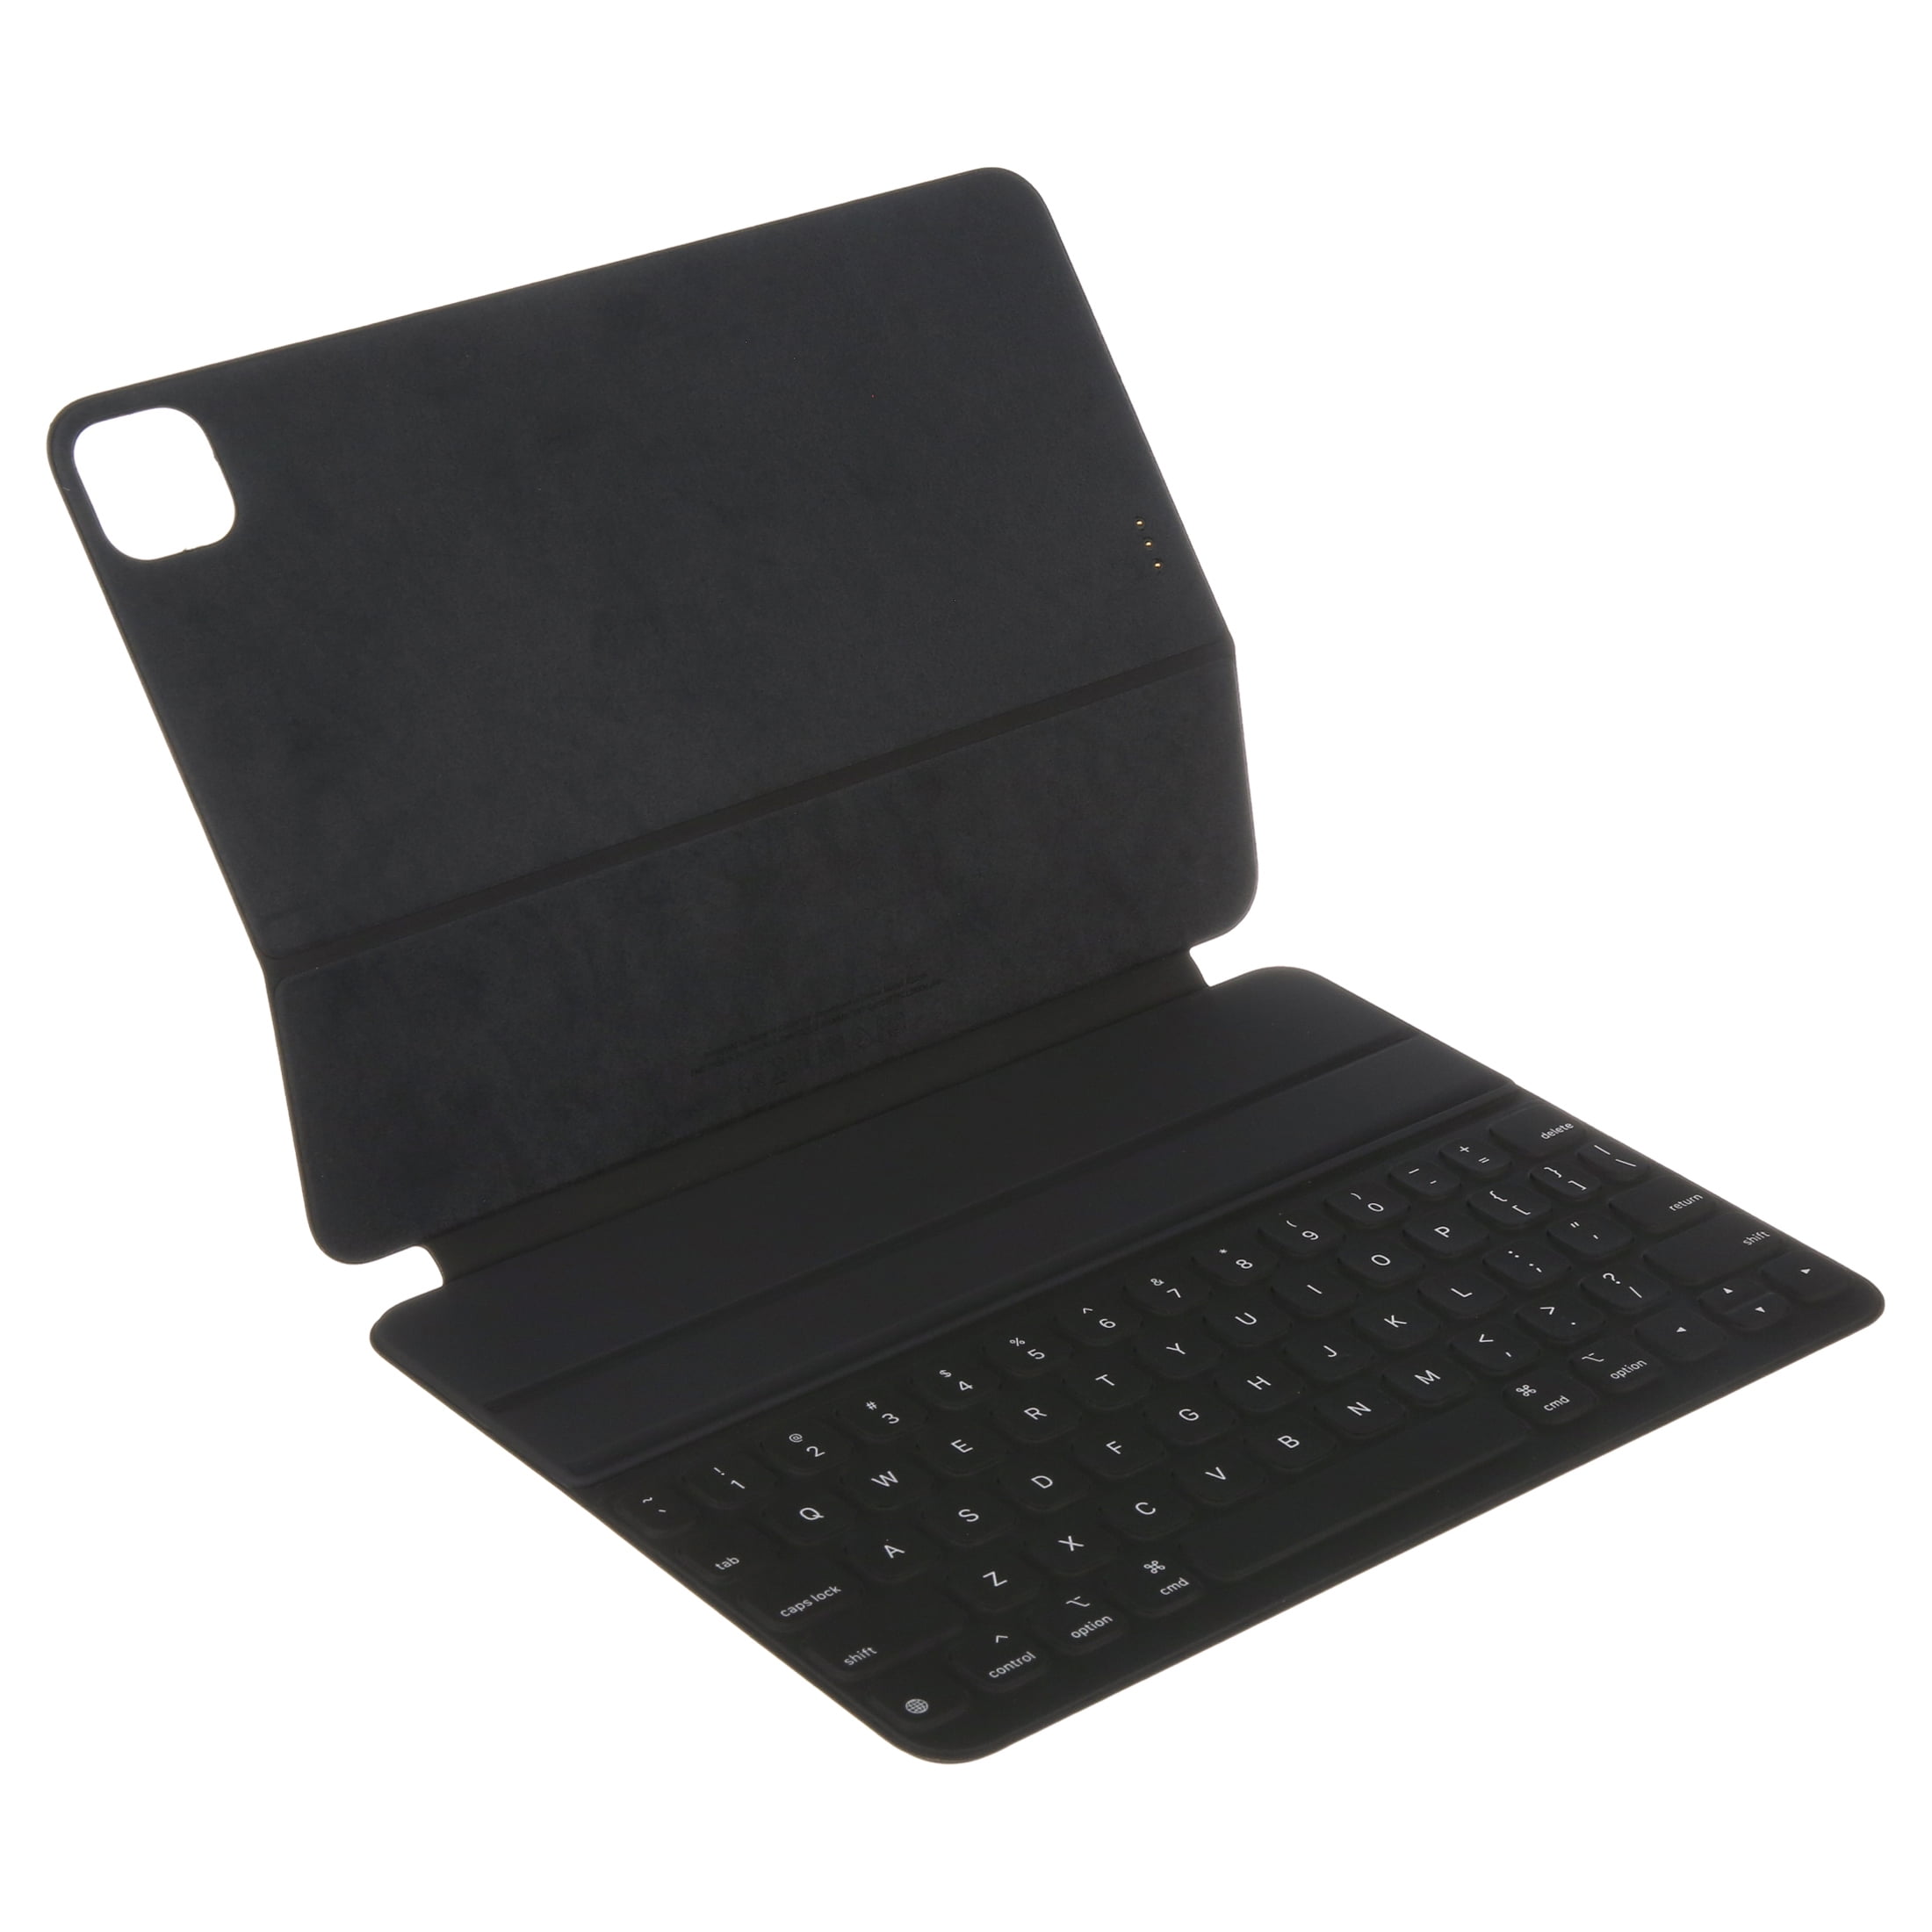 Smart Keyboard Folio for iPad Pro 11-inch (4th generation) and iPad Air  (5th generation) - US English